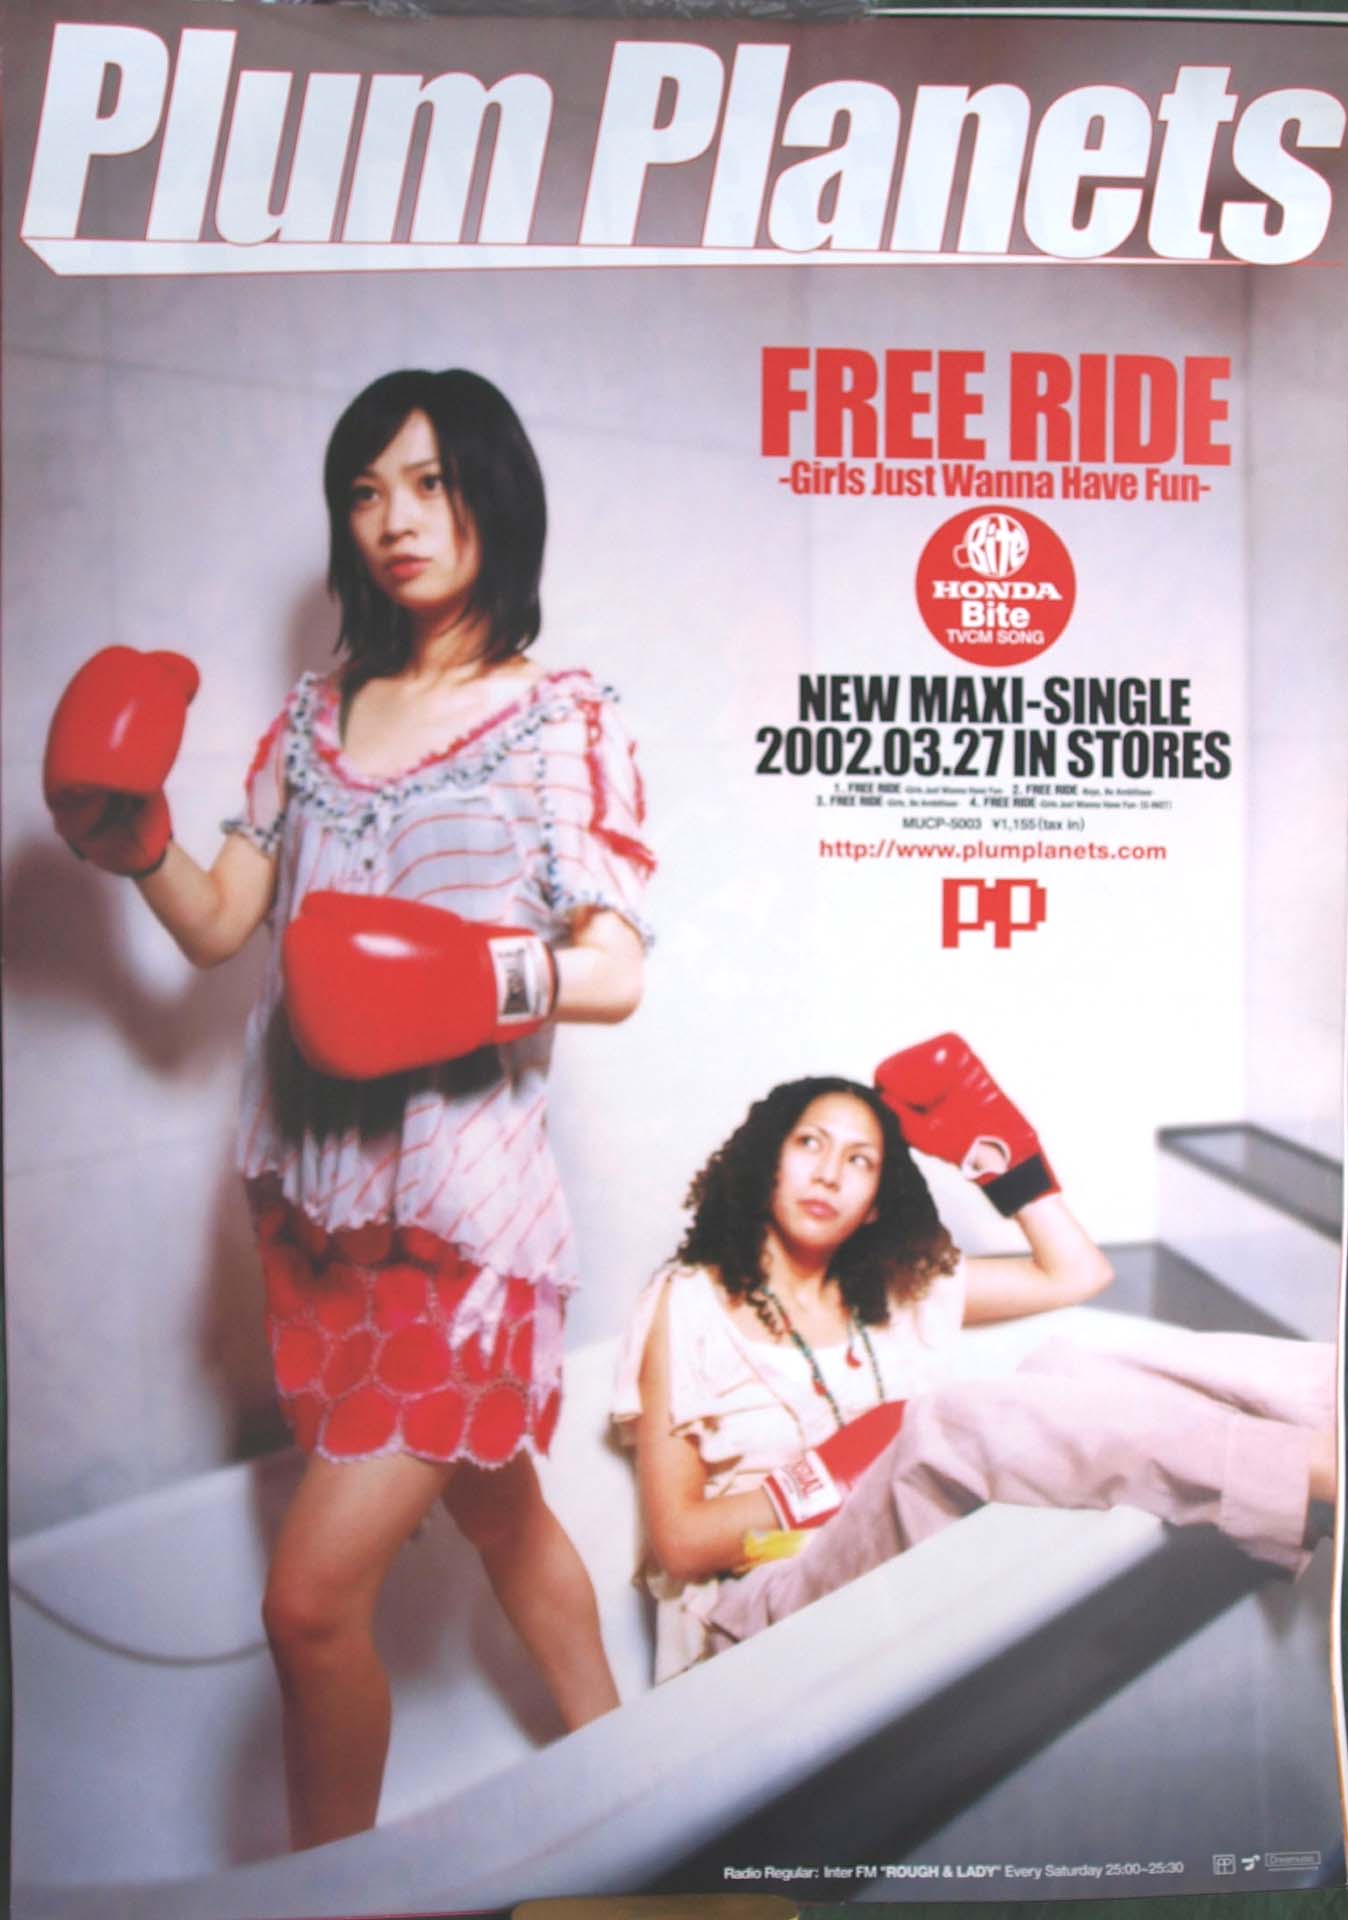 Plum Planets 「FREE RIDE−Girls Just Wanna Have Fun−」 のポスター